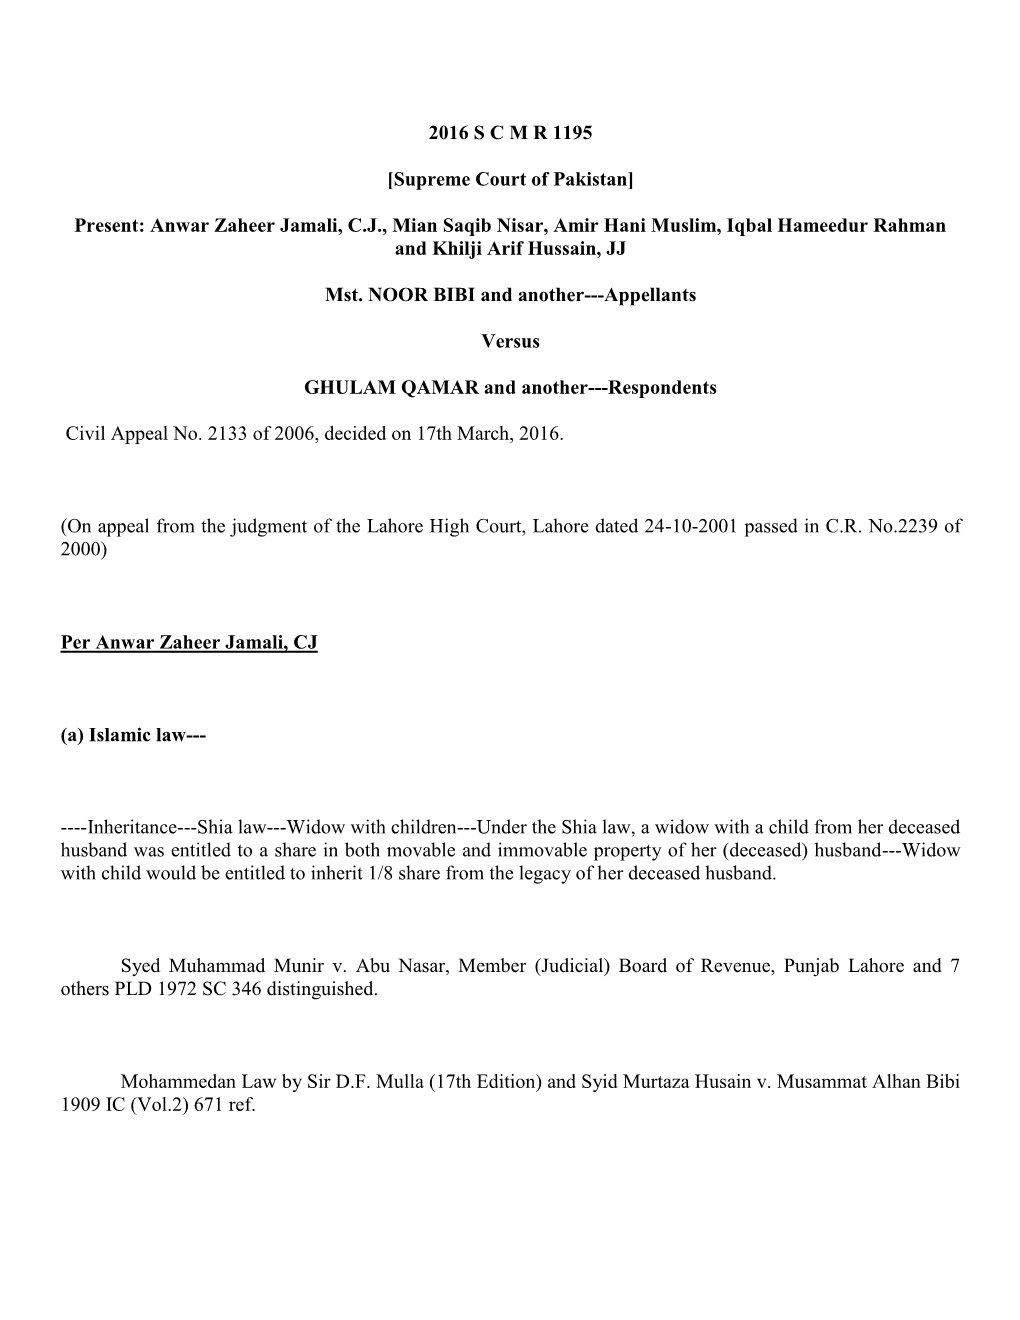 2016 S C M R 1195 [Supreme Court of Pakistan] Present: Anwar Zaheer Jamali, C.J., Mian Saqib Nisar, Amir Hani Muslim, Iqbal Hame